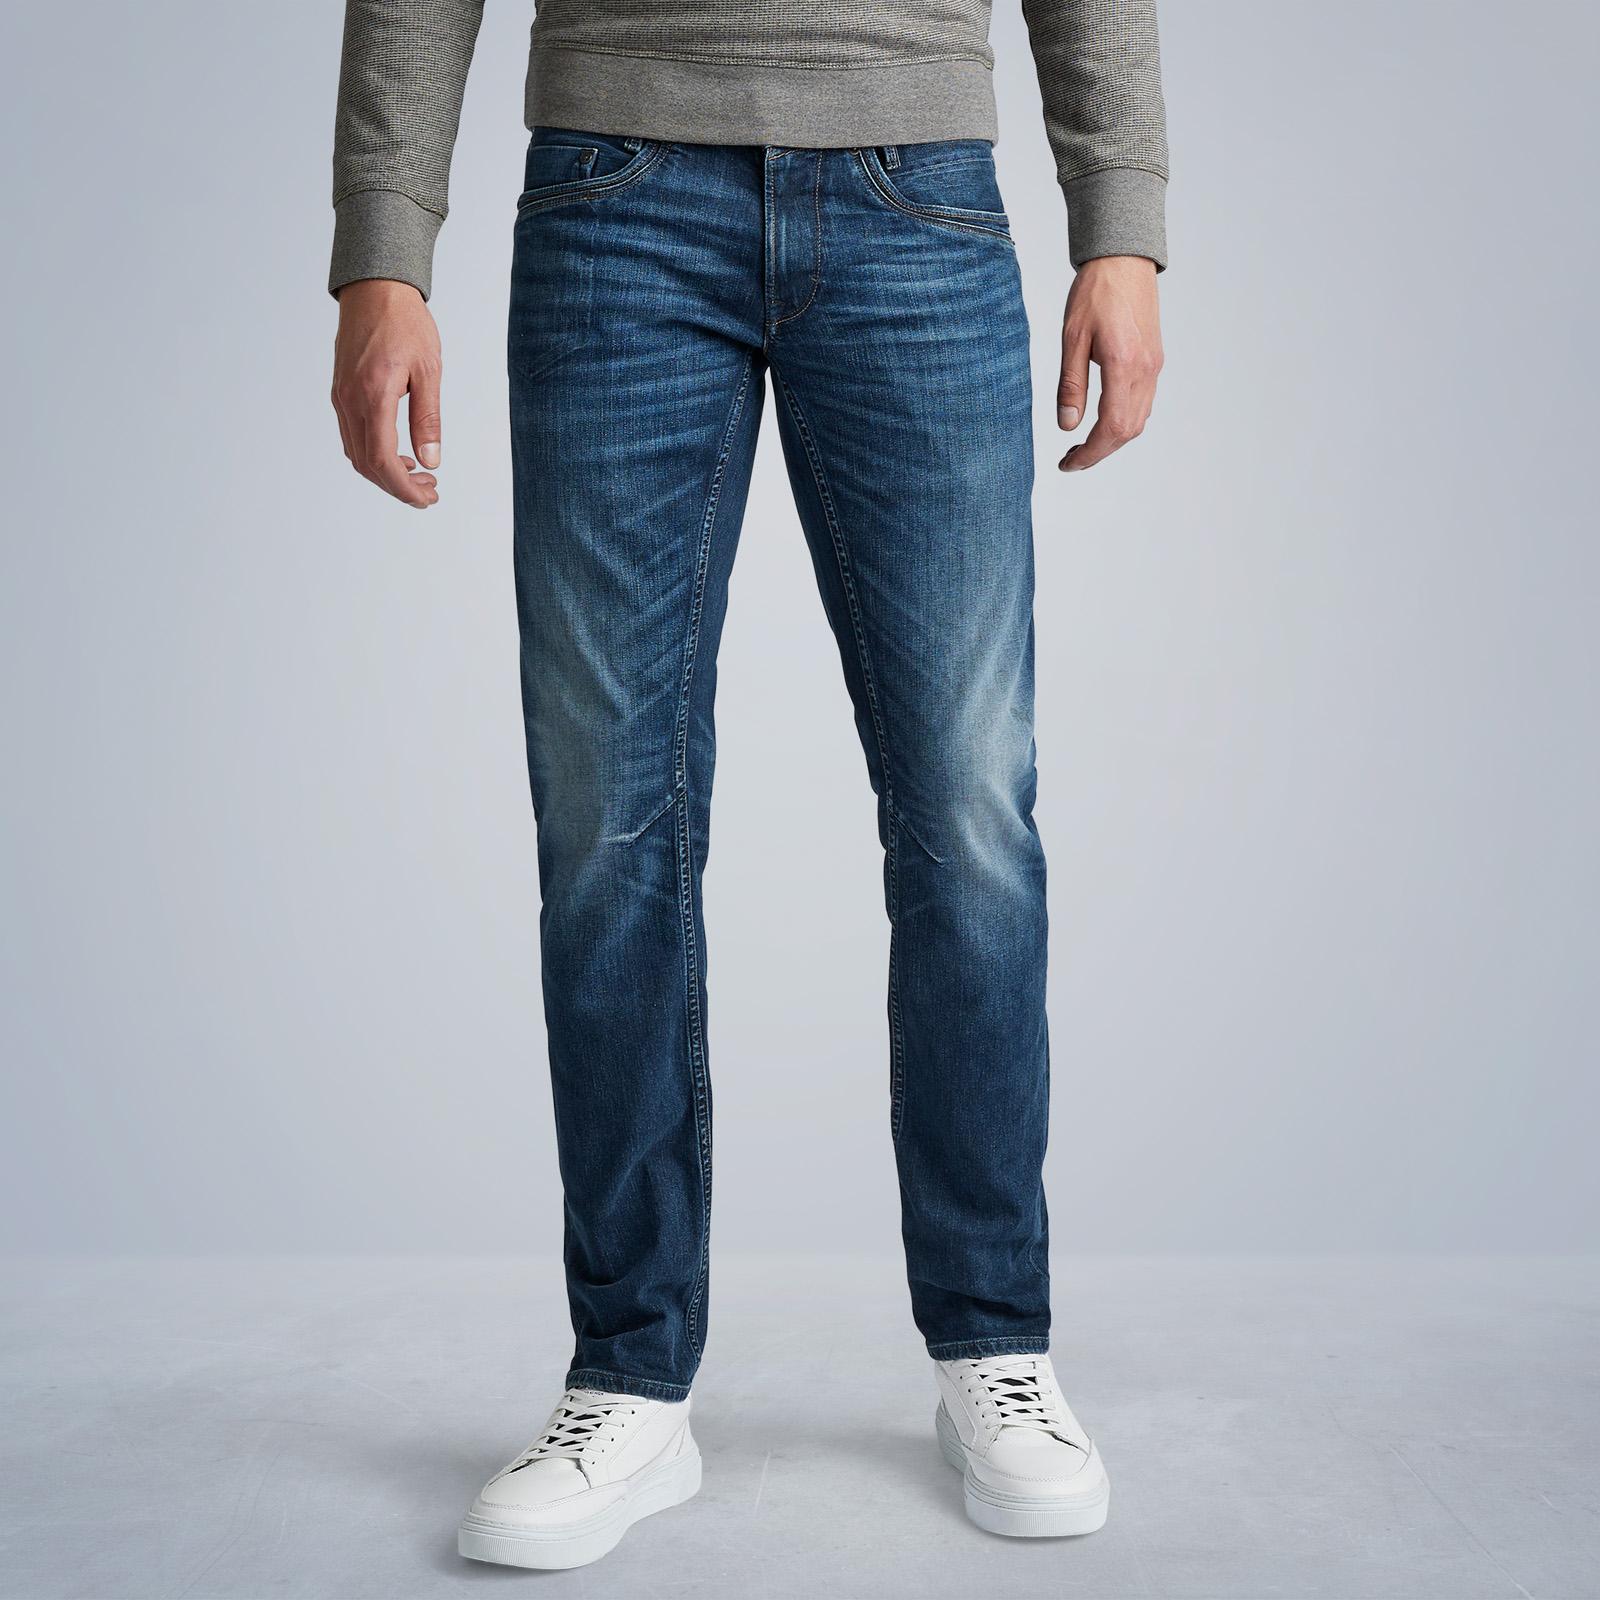 PME Legend Skymaster jeans product